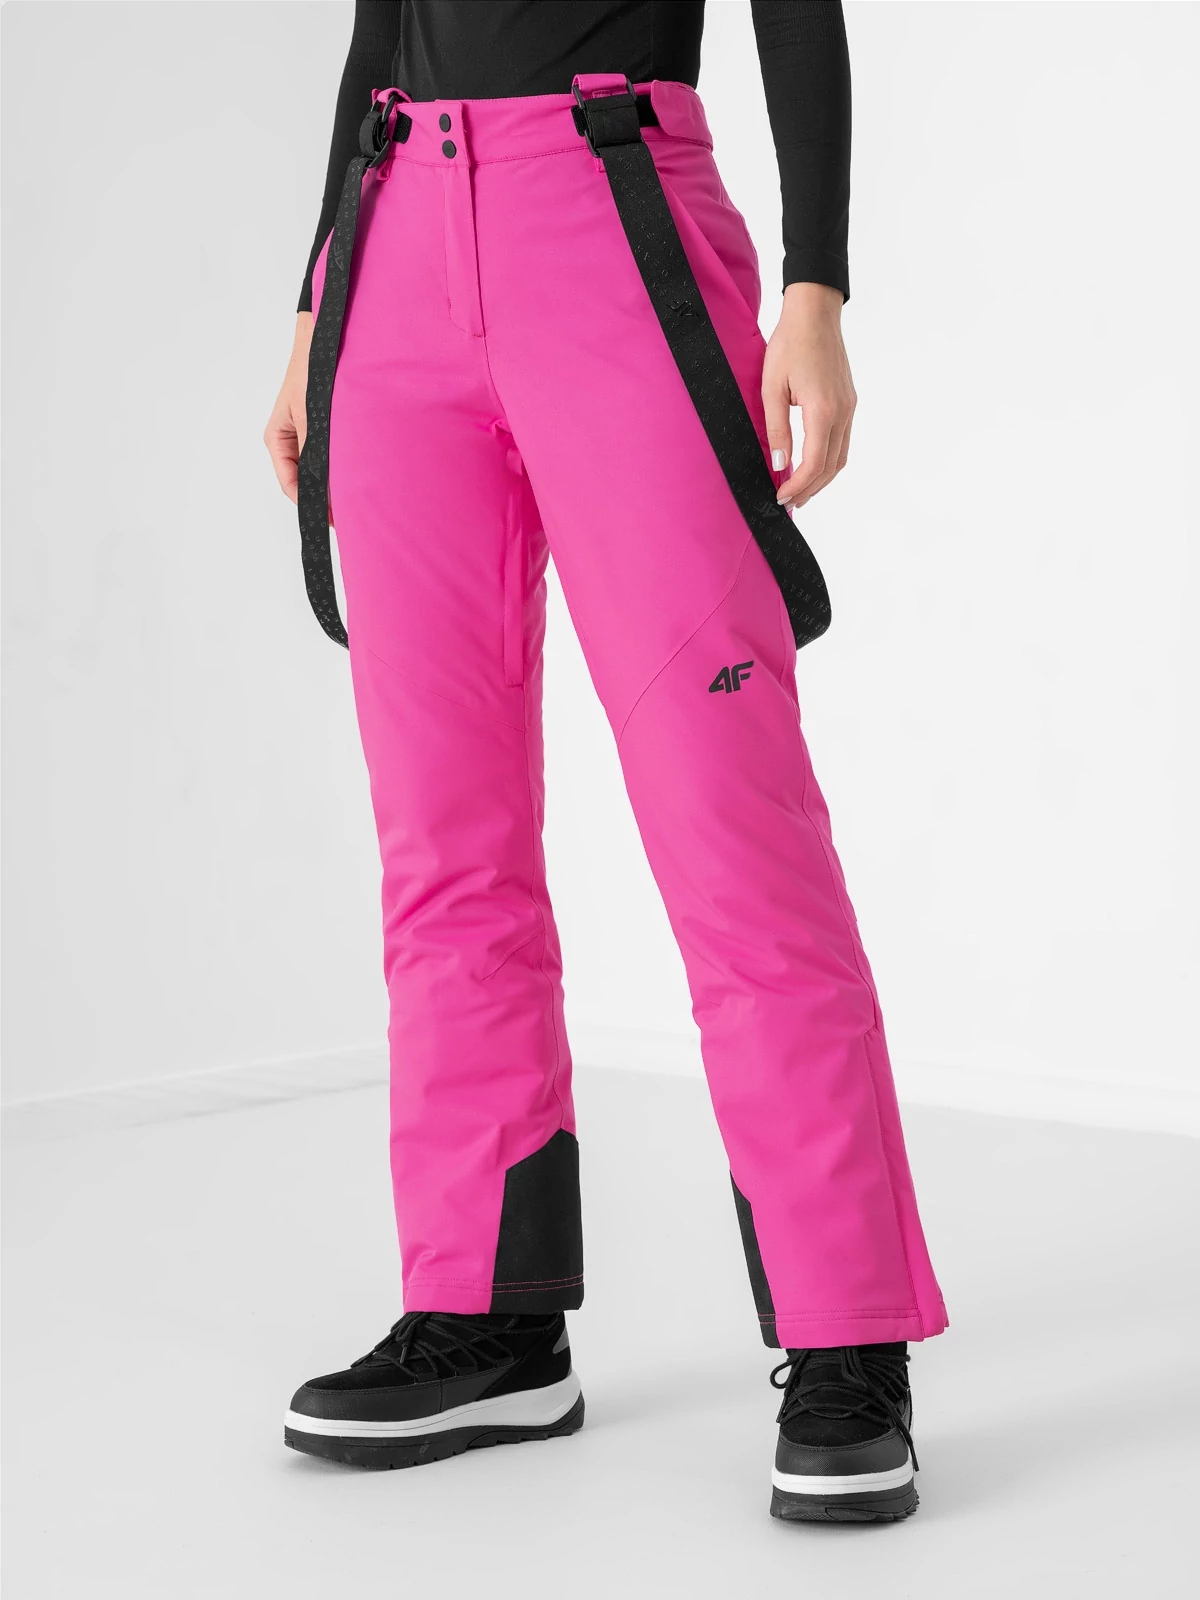 Women\'s ski trousers membrane 000 and shoes 8 4F: Sportswear 